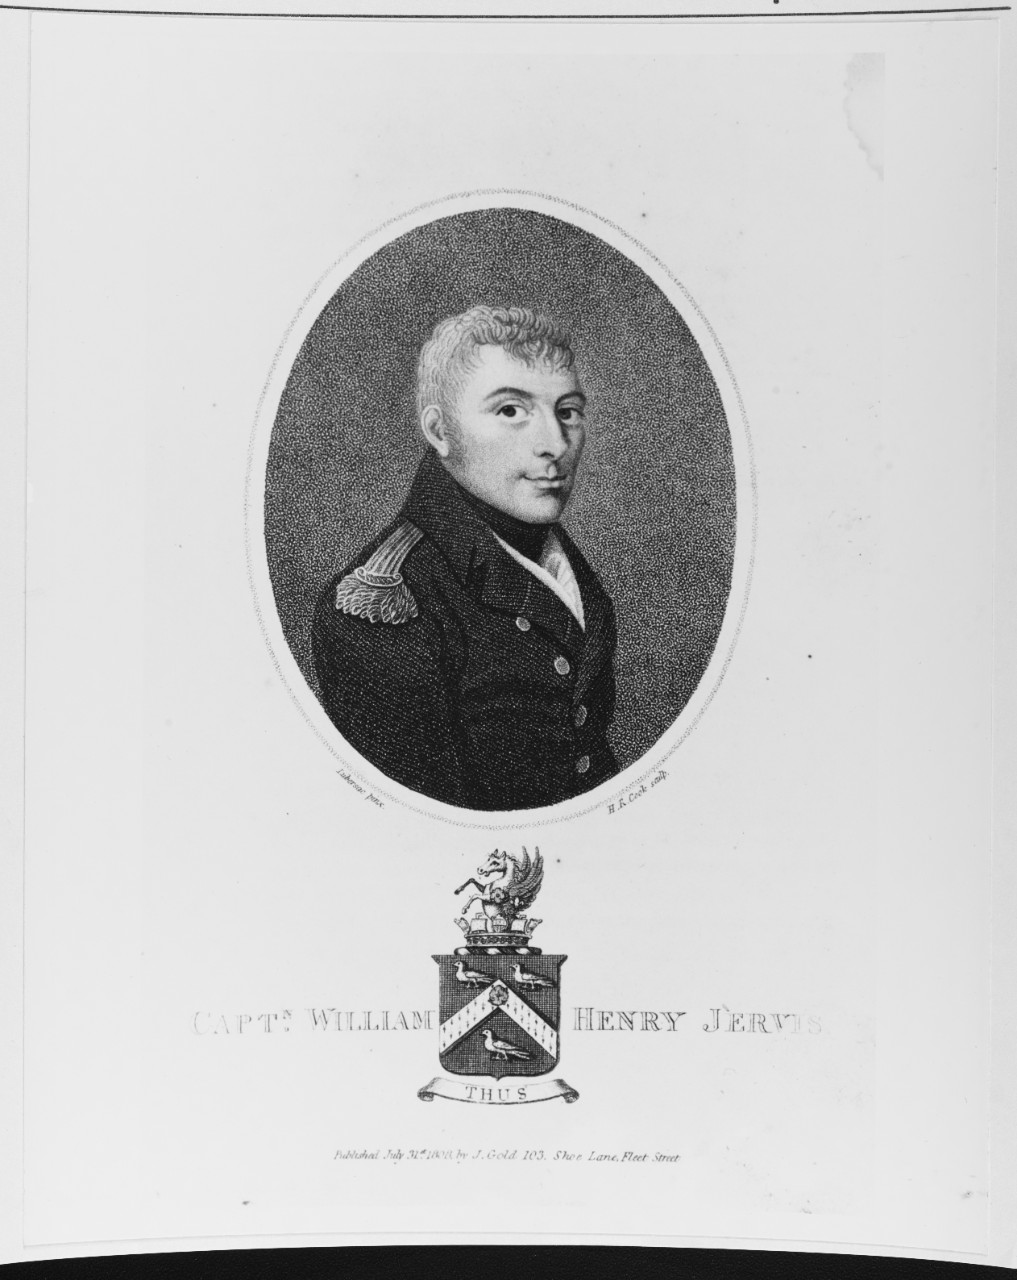 Captain William Henry Jervis, RN